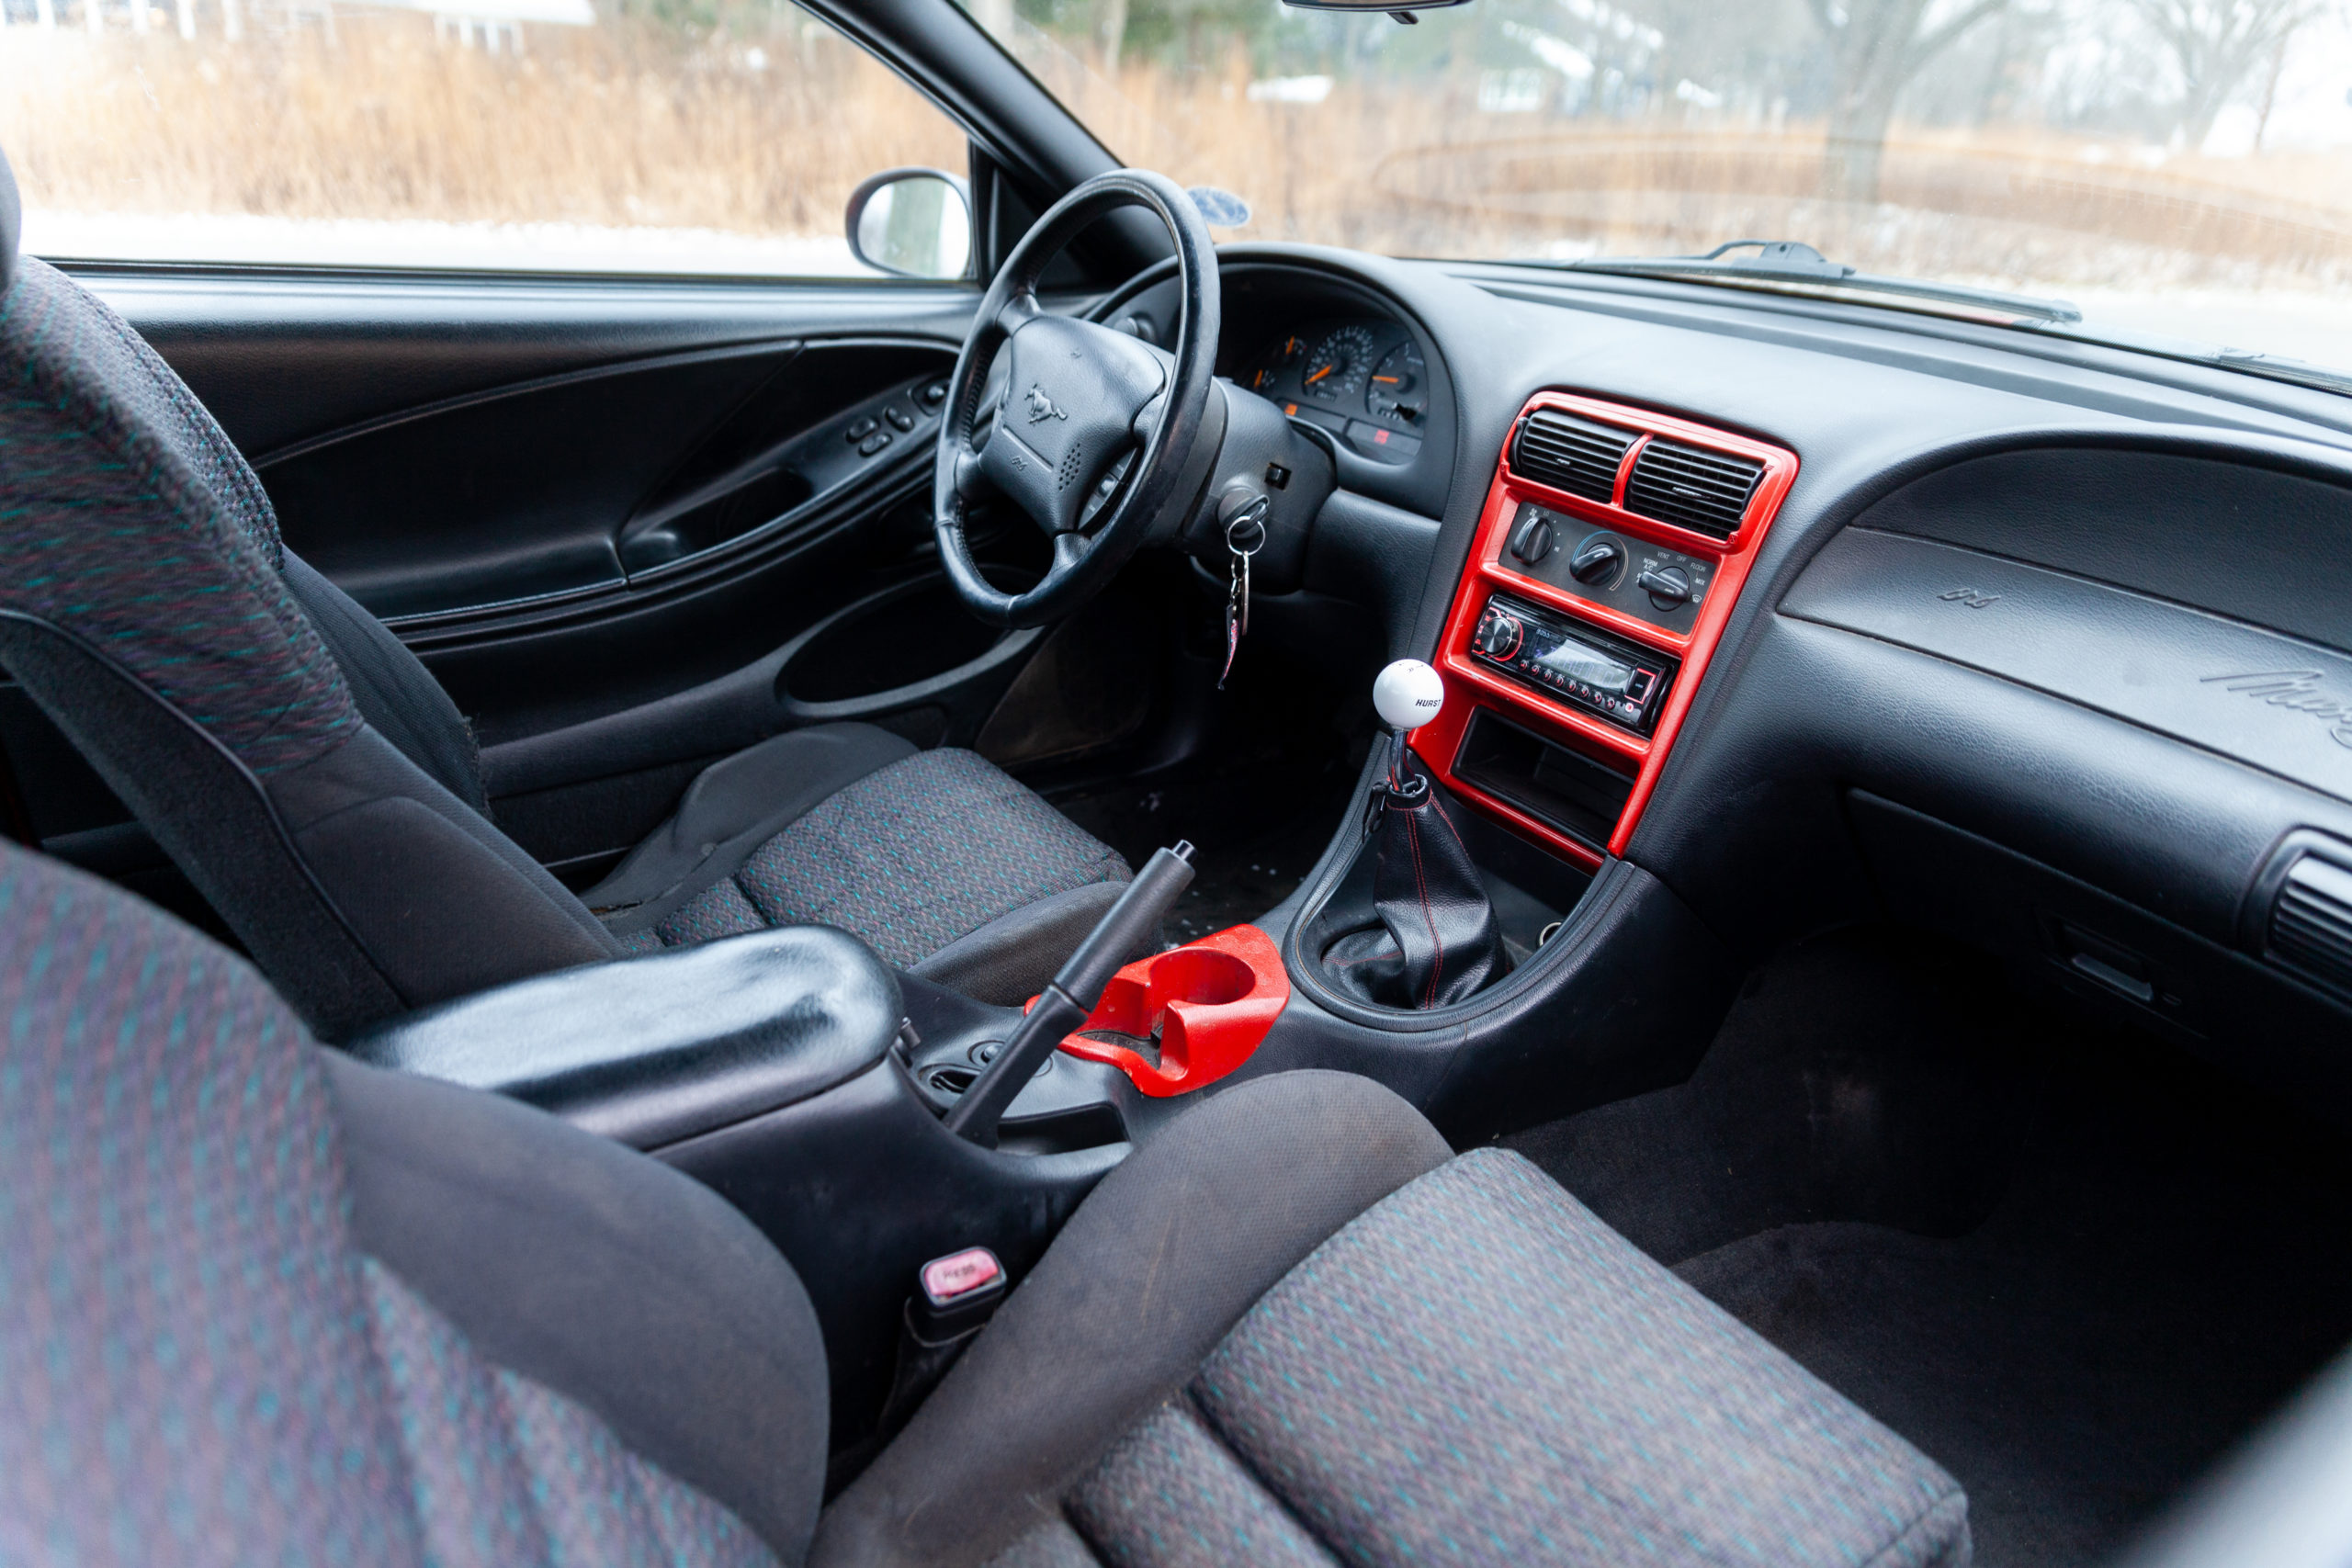 Drift Mustang Chris Stark interior front angle